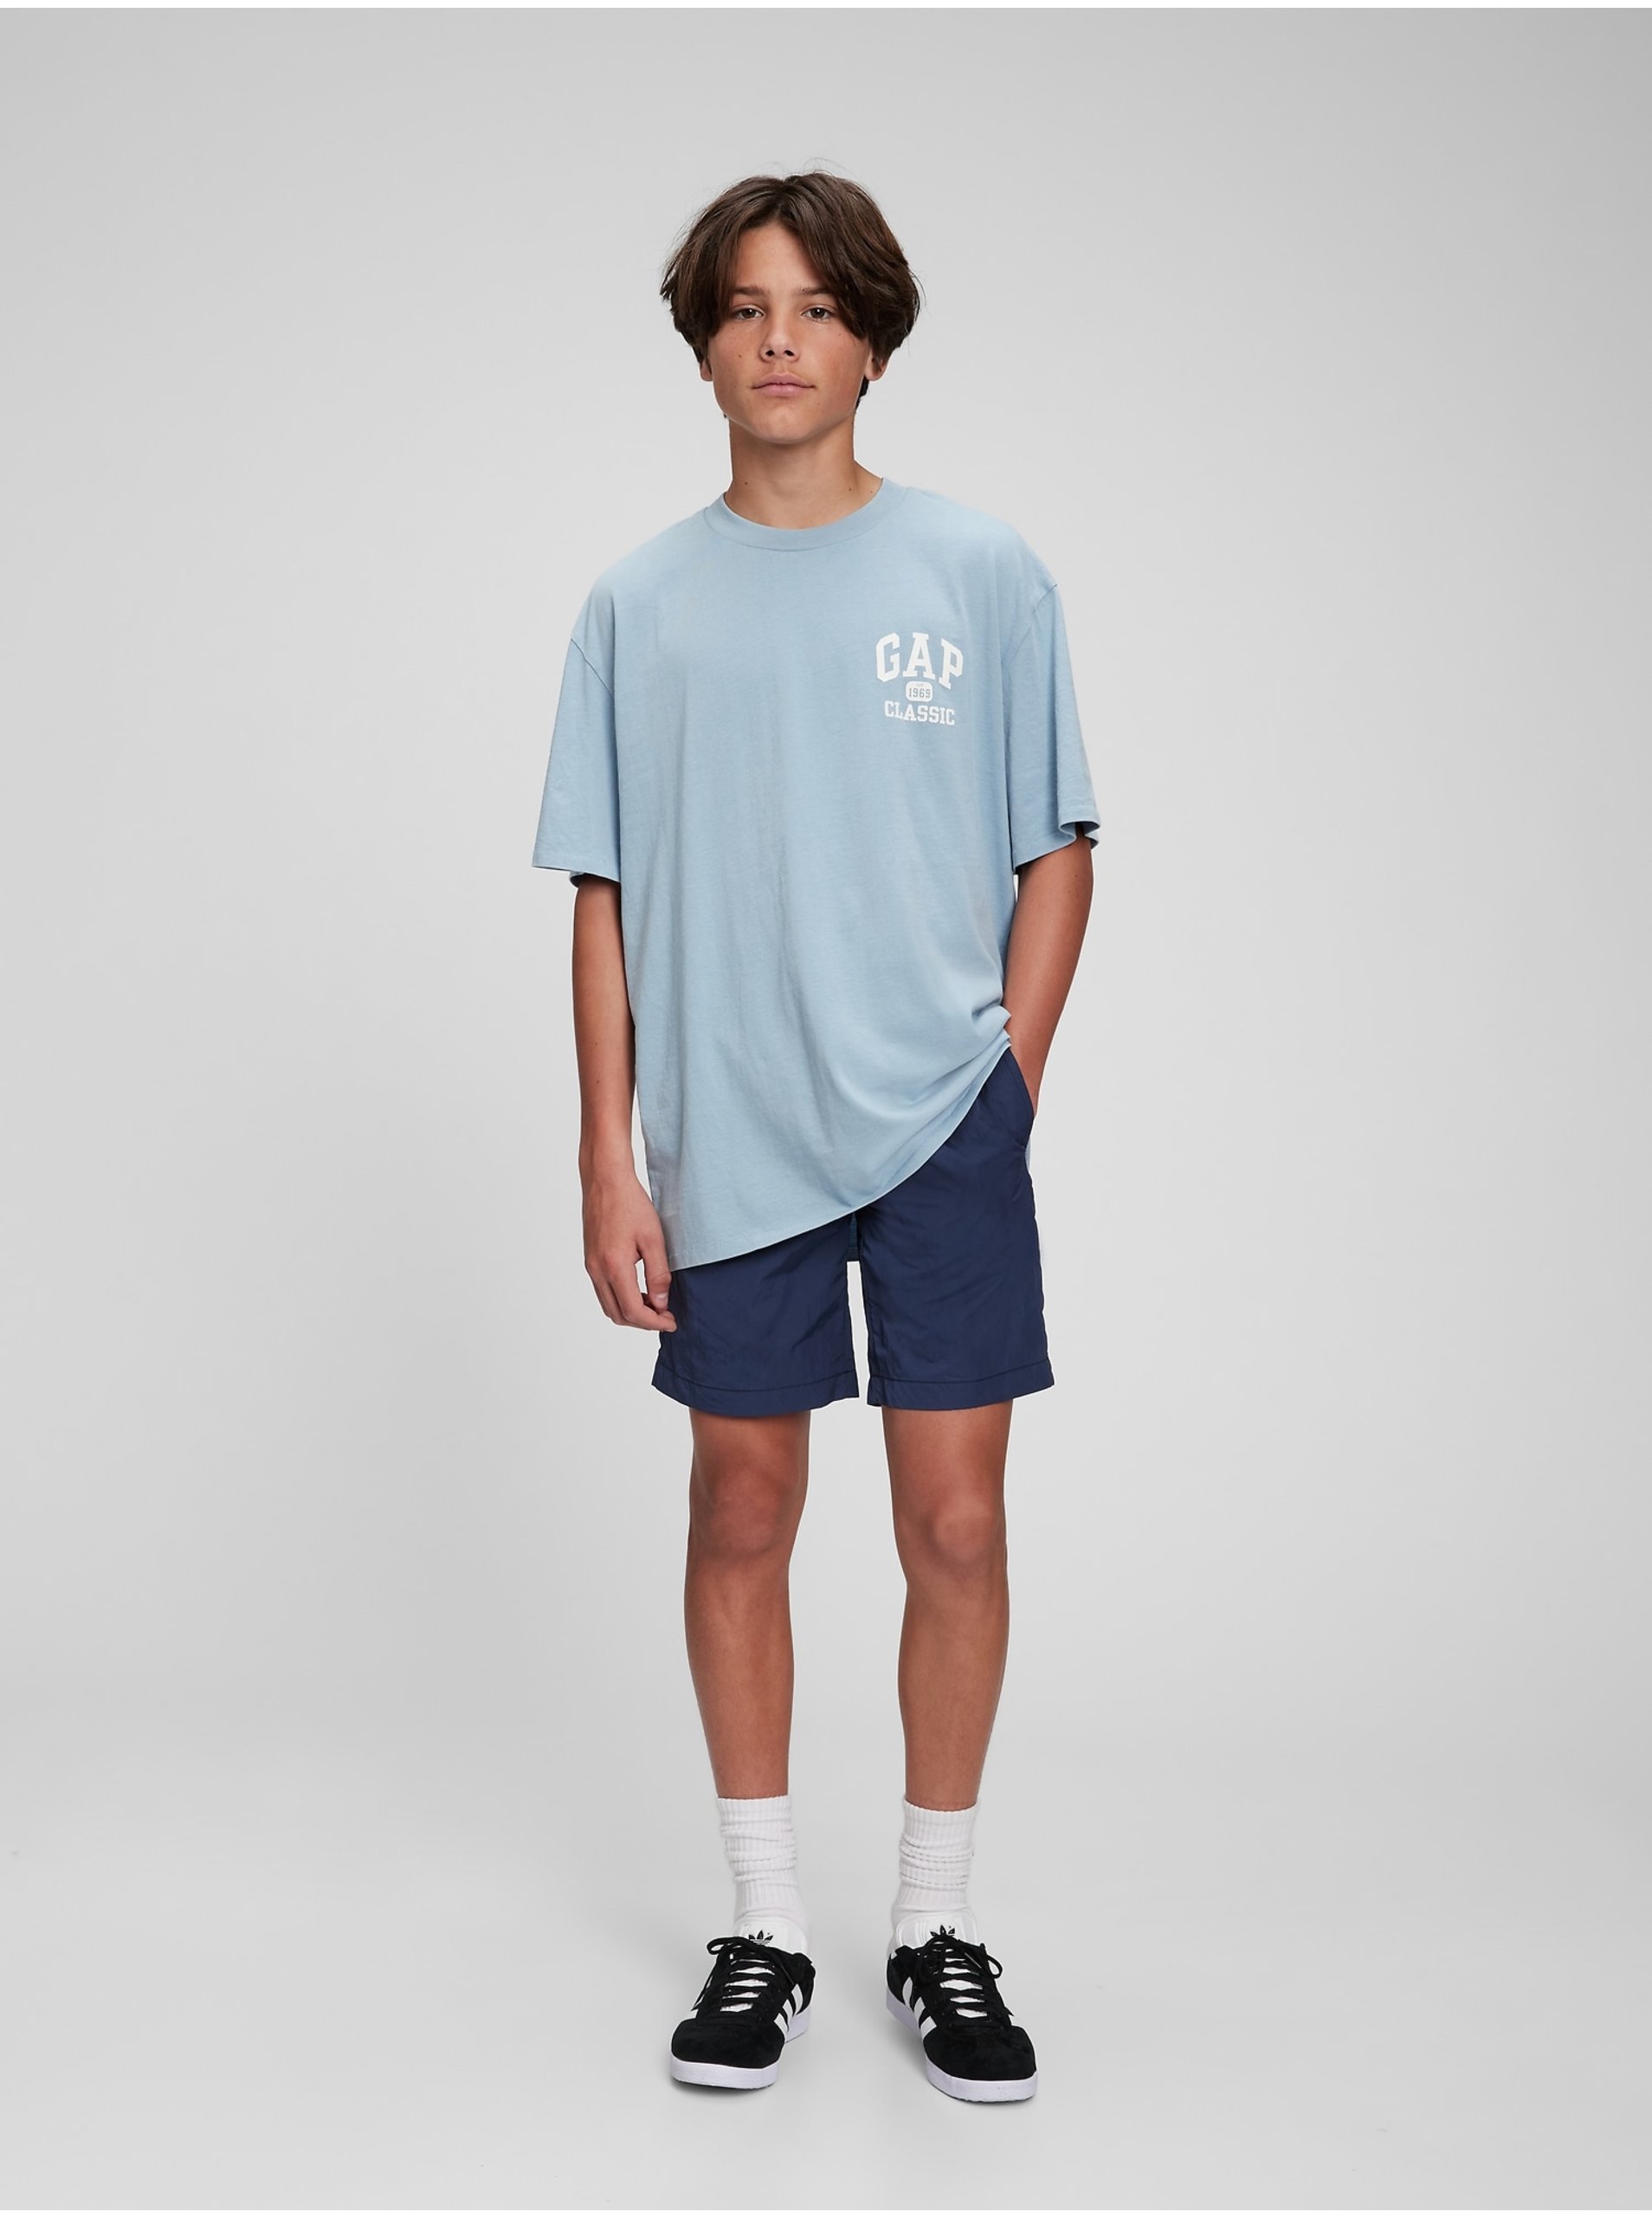 Lacno Modré chlapčenské tričko Teen organic GAP